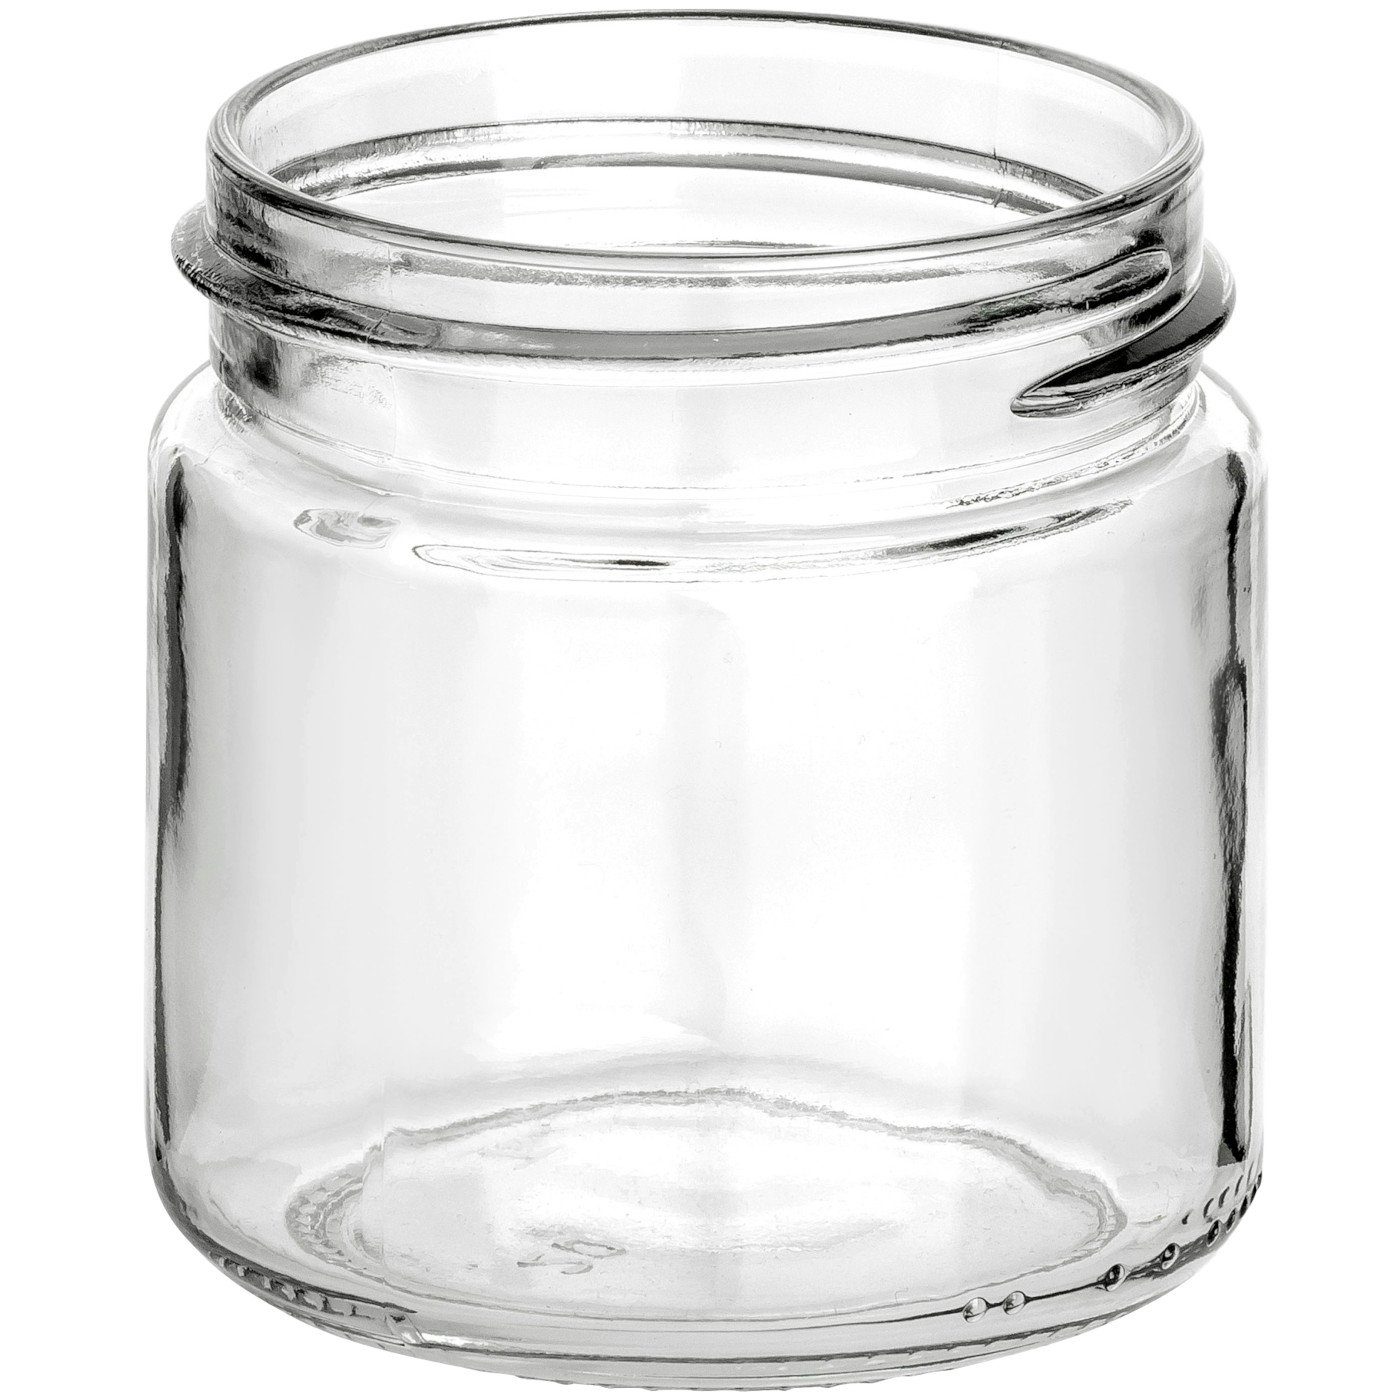 Kunststoff-Deckel Honigglas gouveo 250g goldfarben - (12-tlg) Leere Marmeladengläser, mit